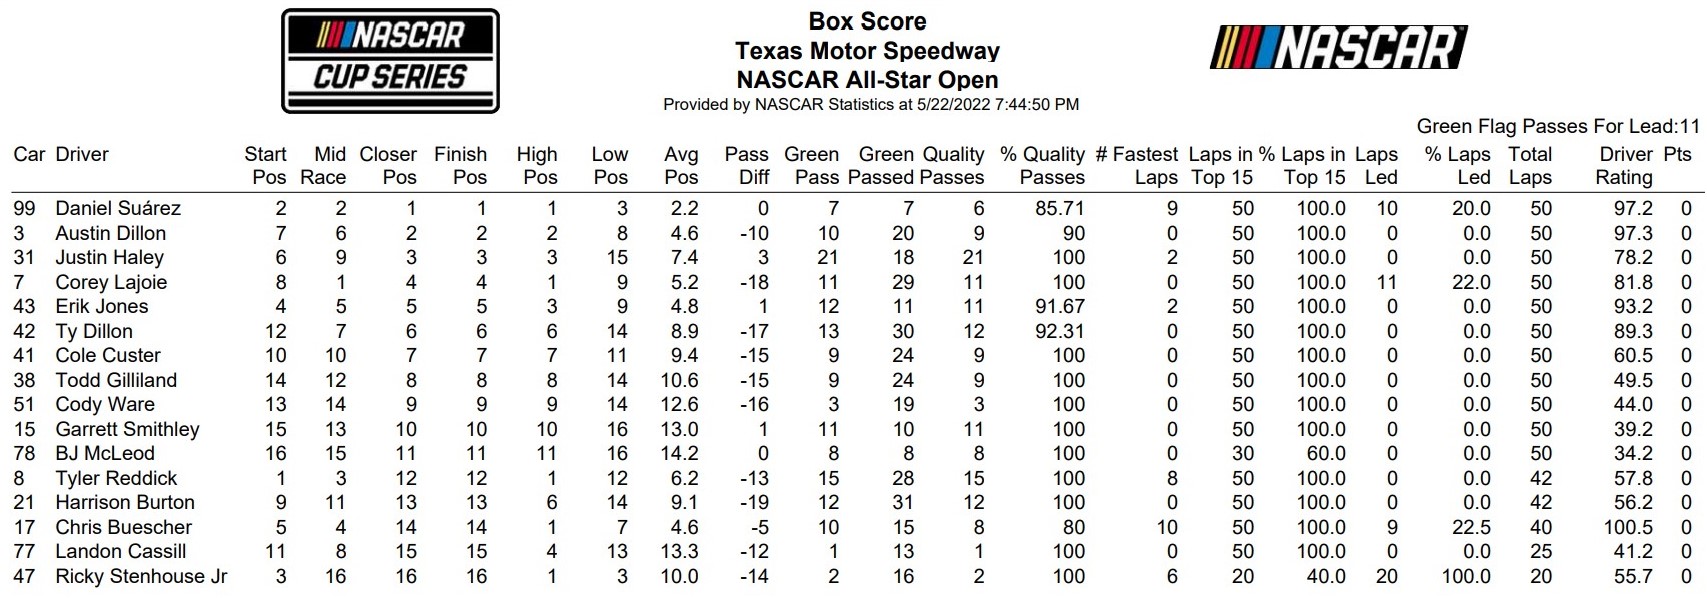 Texas NASCAR AllStar Open Loop Data Box Score and Speed Stats